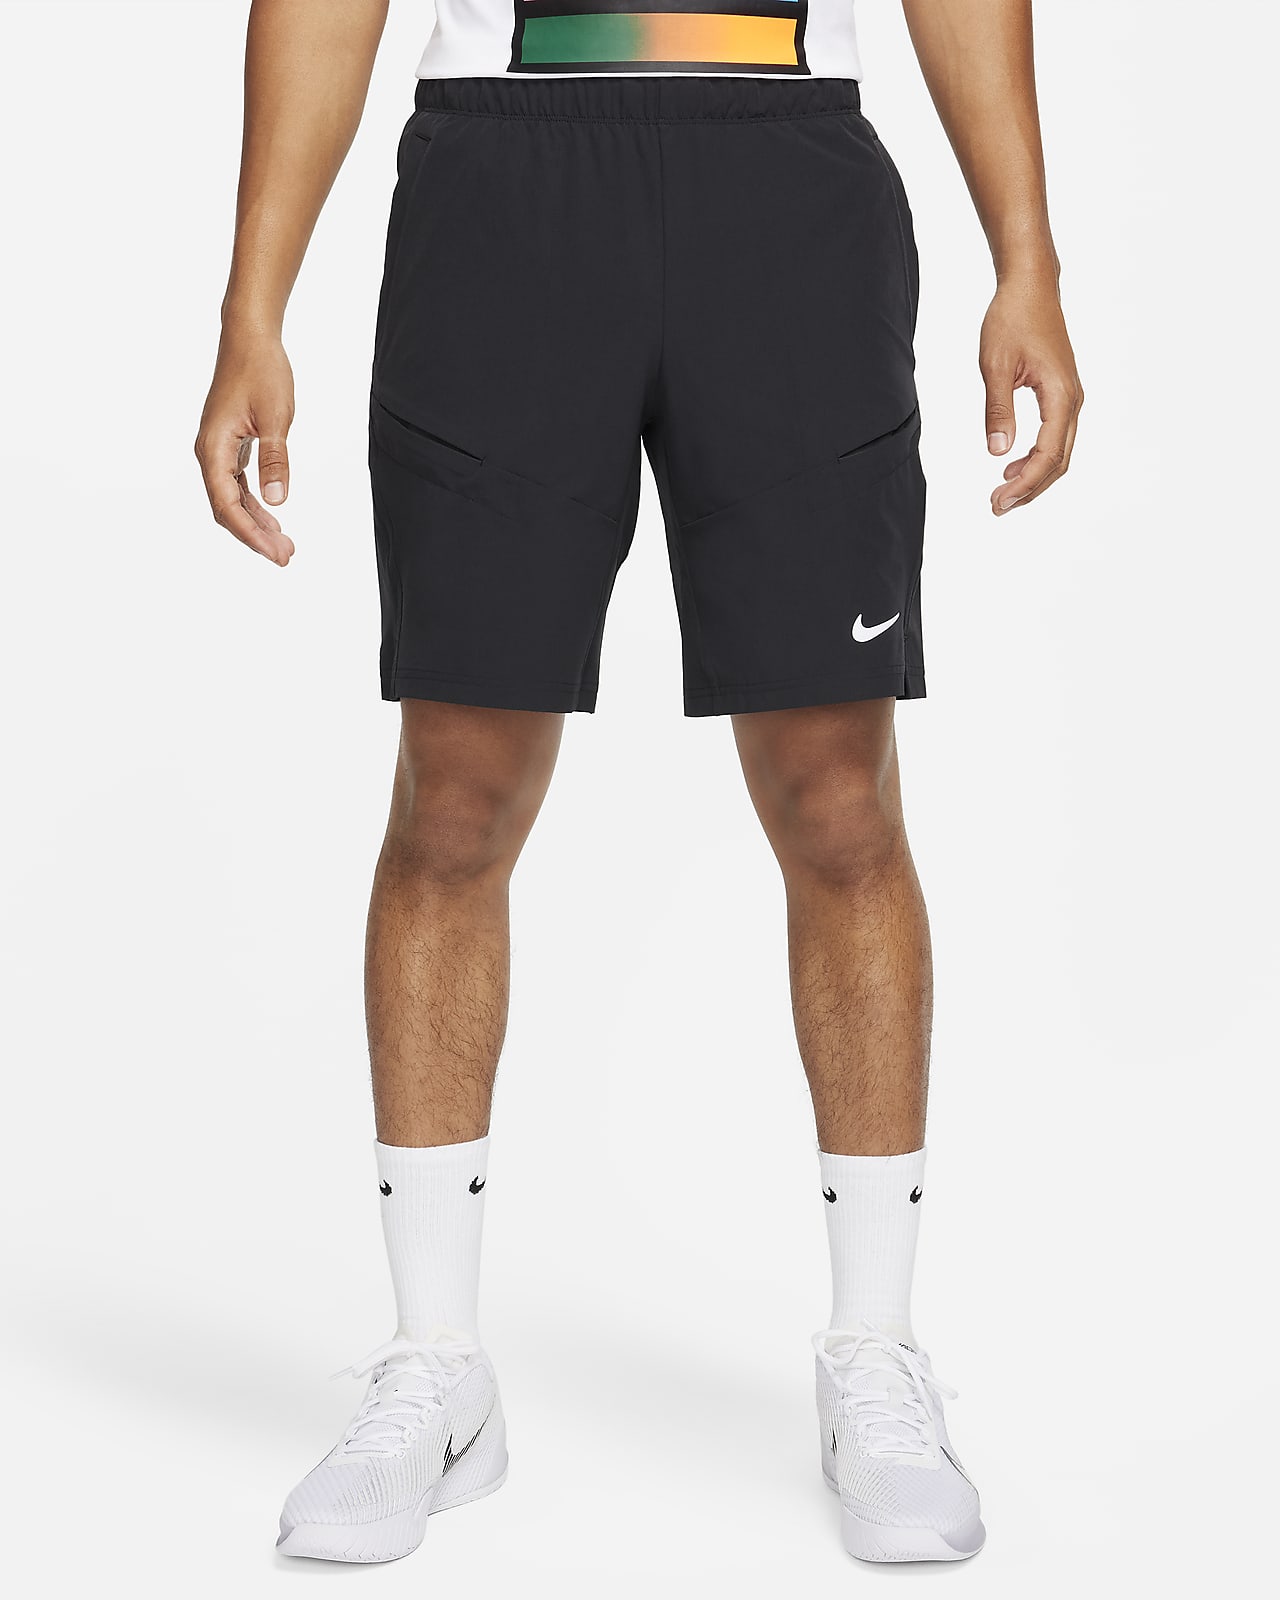 NikeCourt Advantage-tennisshorts (23 cm) til mænd